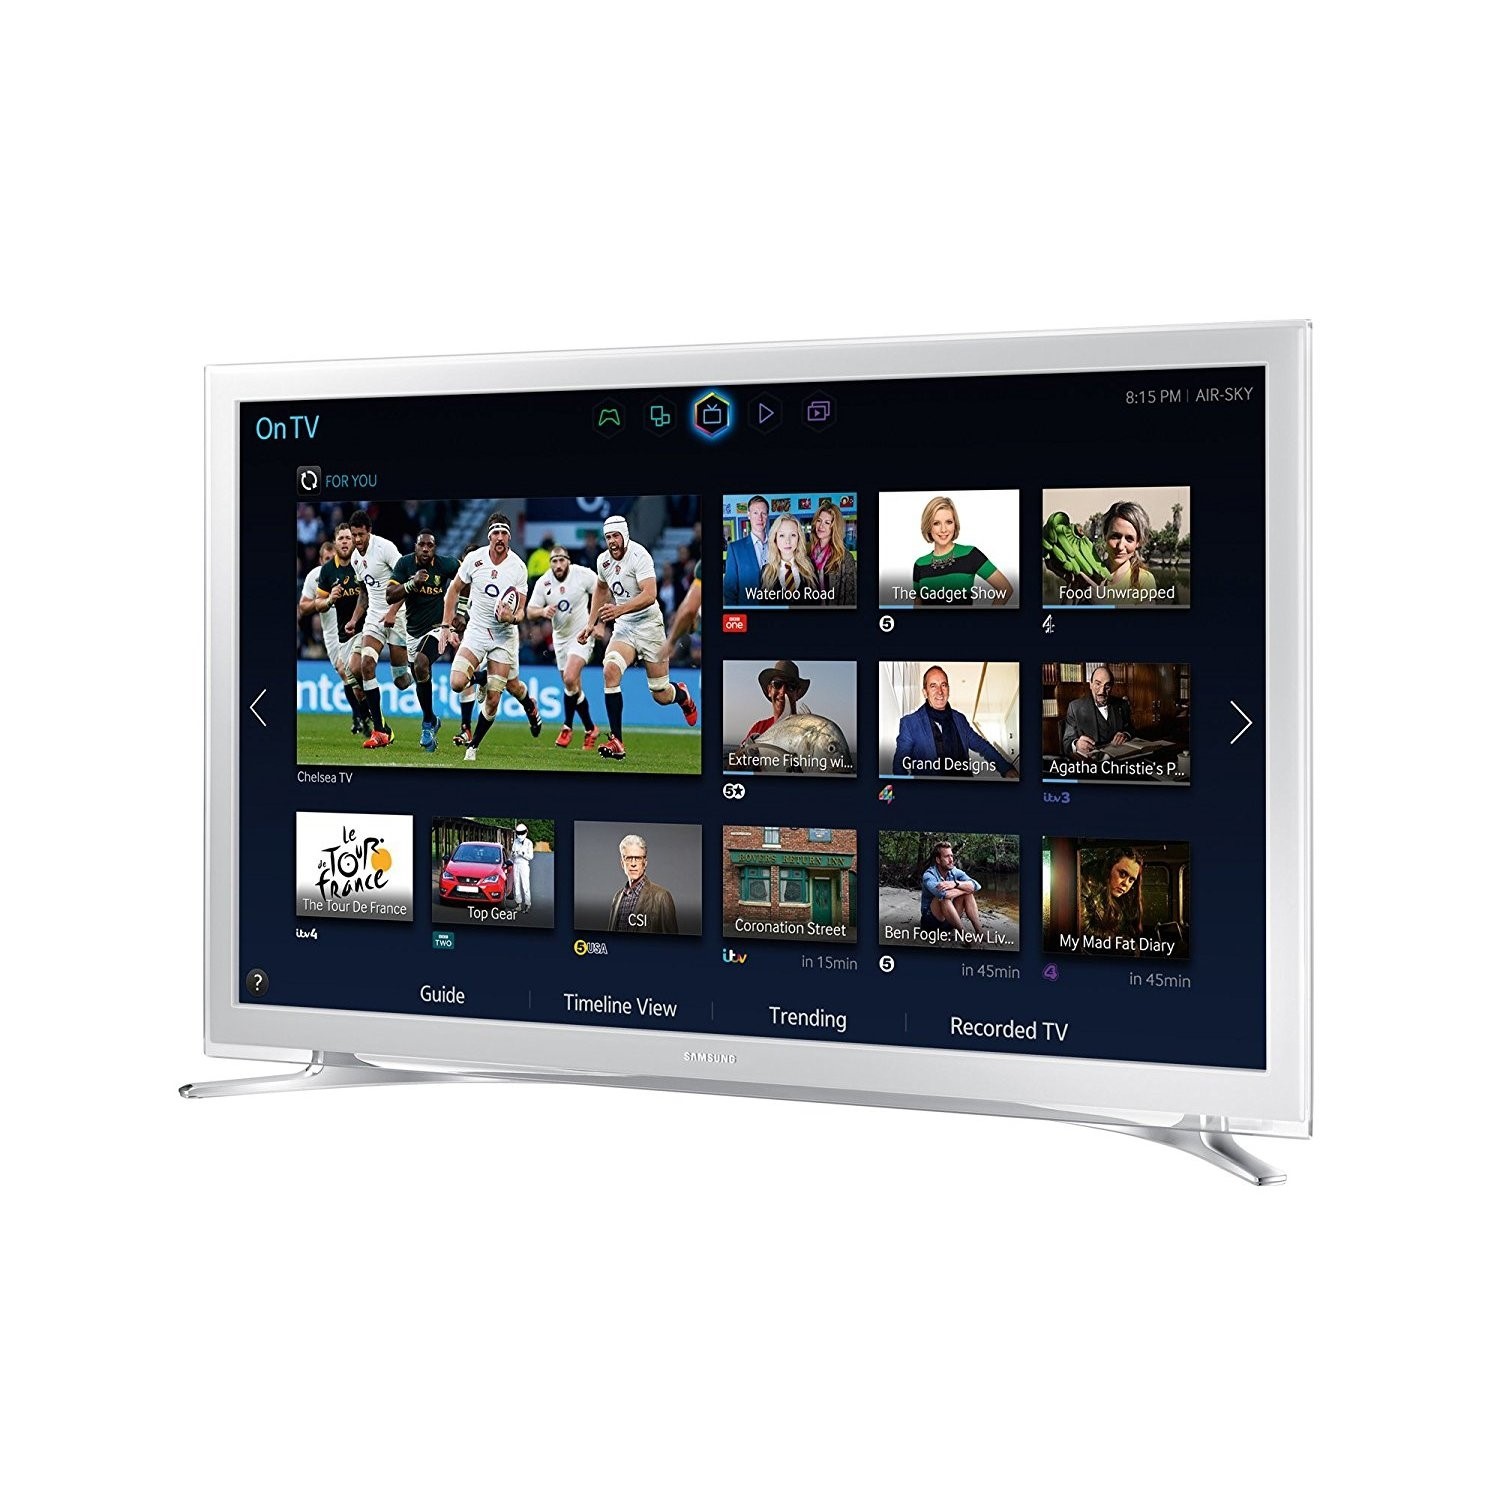 Samsung UE22H5610 22 White 1080p Full HD Smart LED TV with